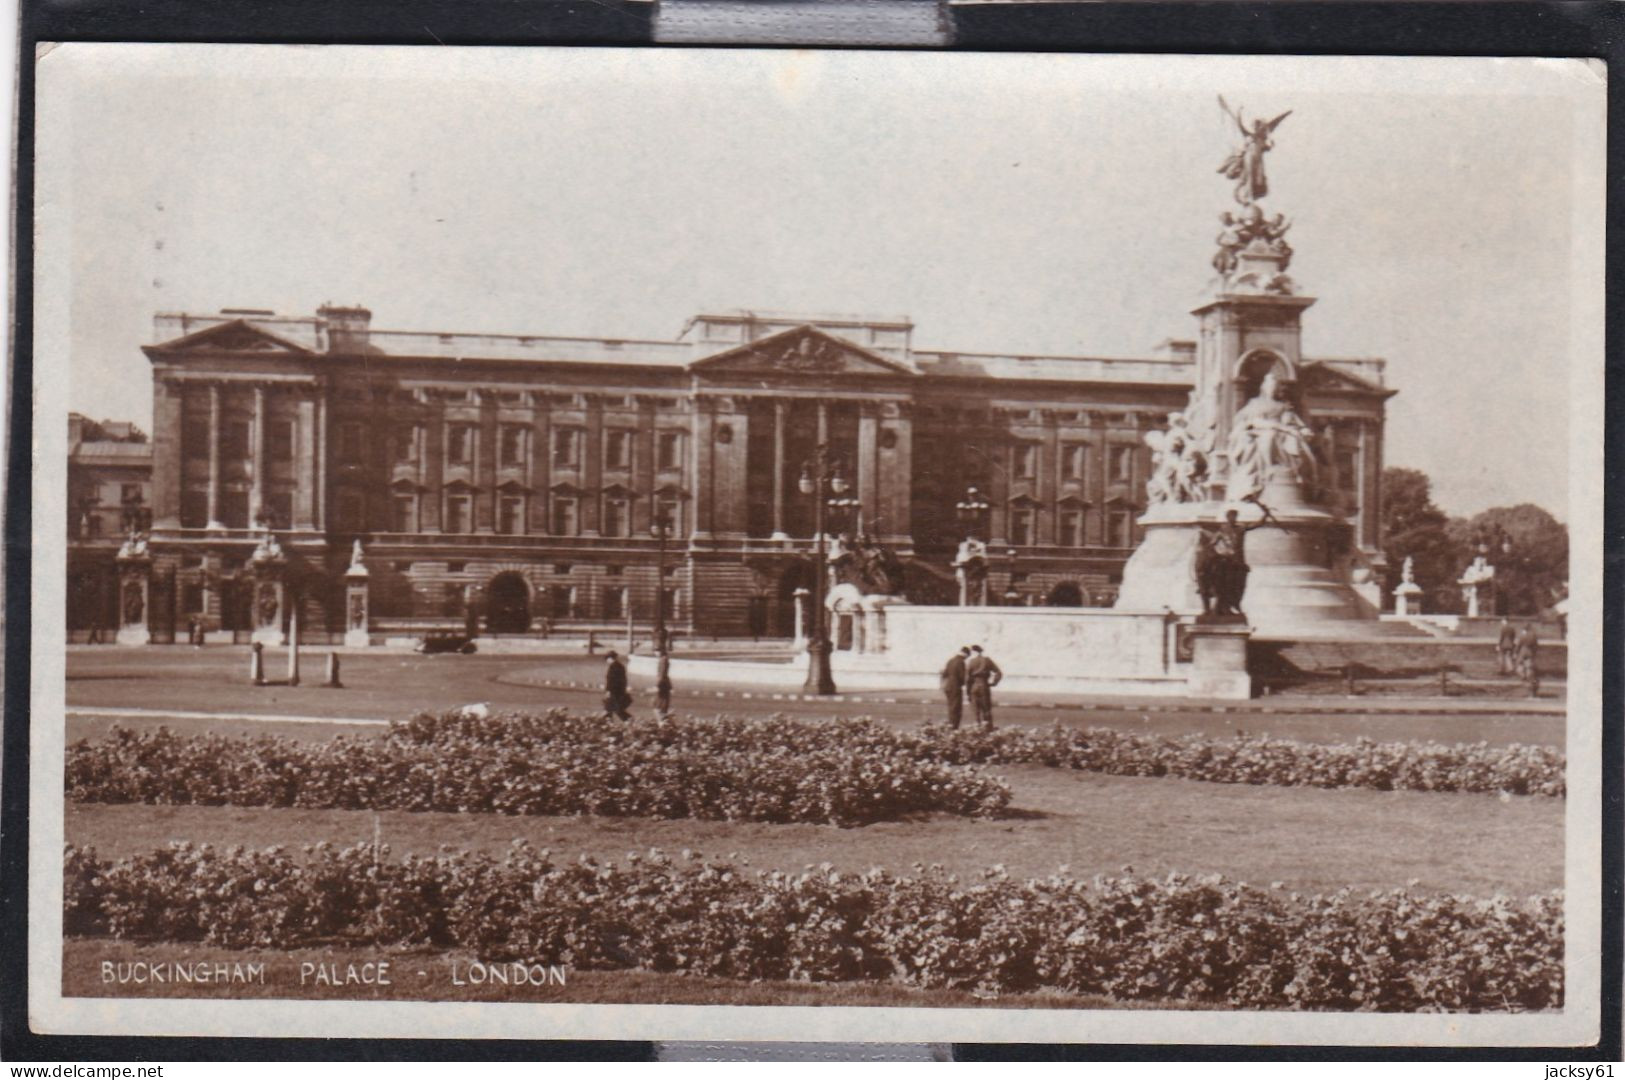 Buckingham Palace - London - Buckingham Palace